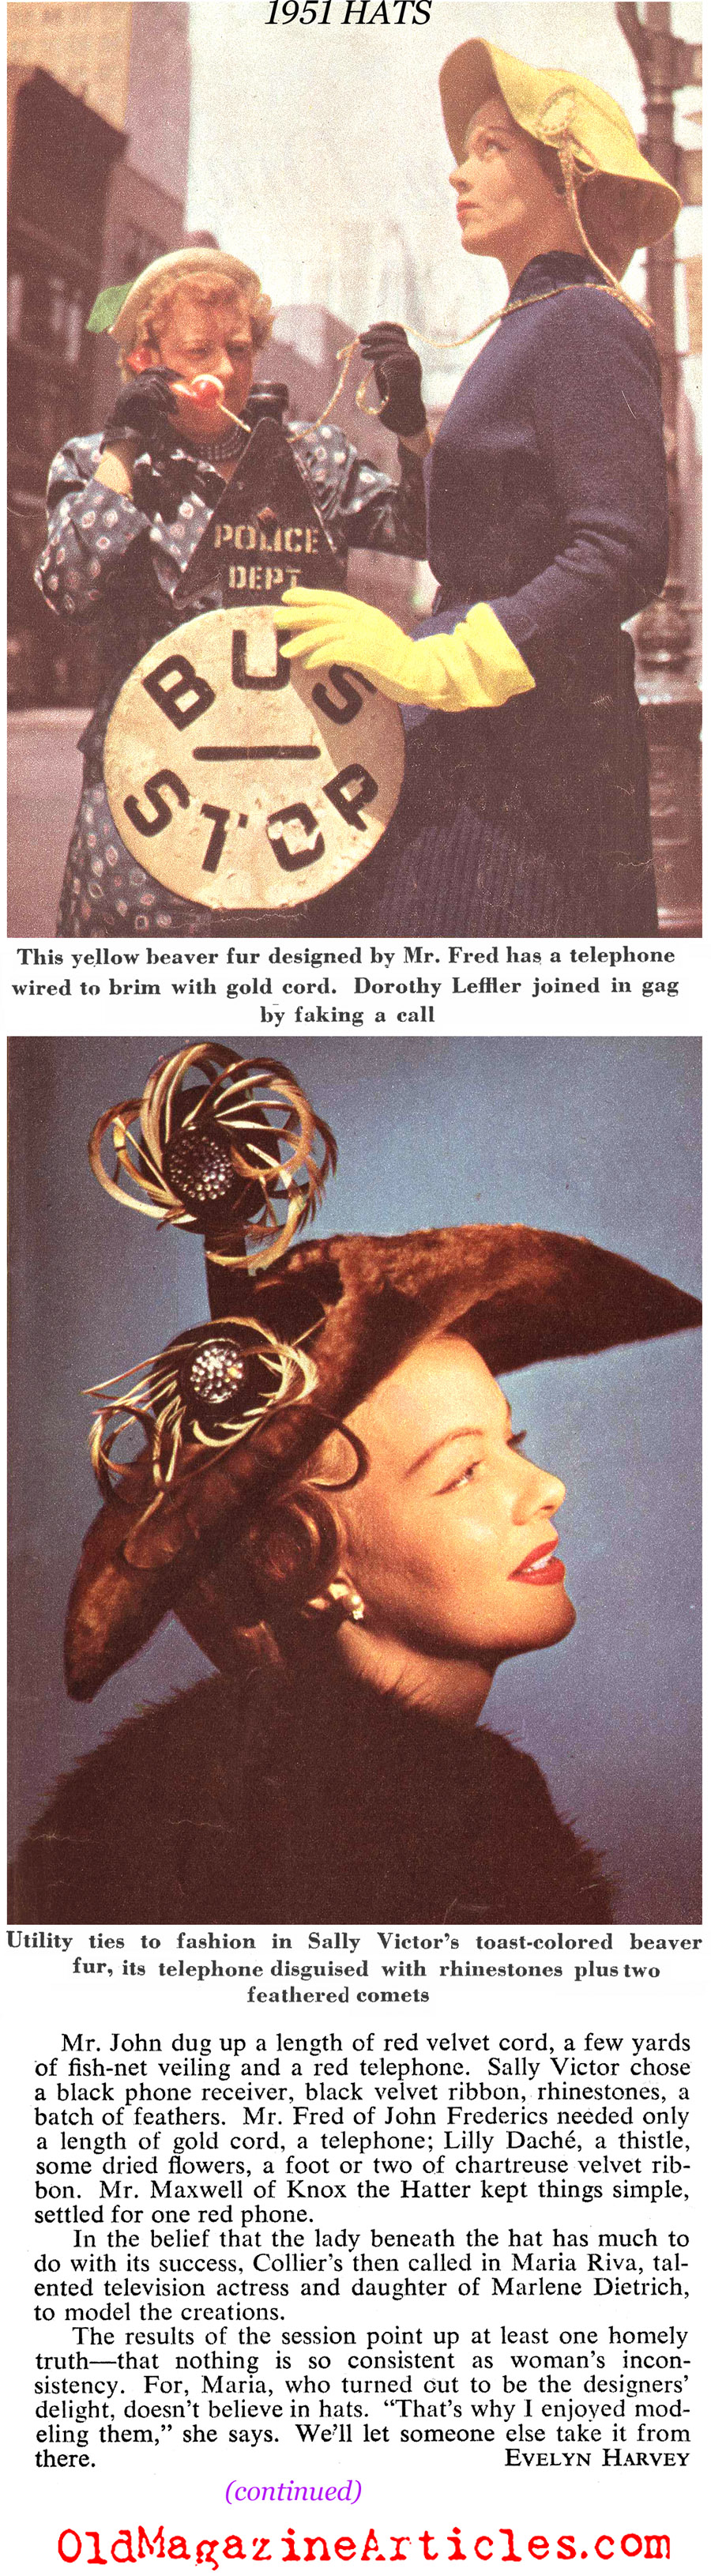 The Milliner's Collaboration (Collier's Magazine, 1951) 